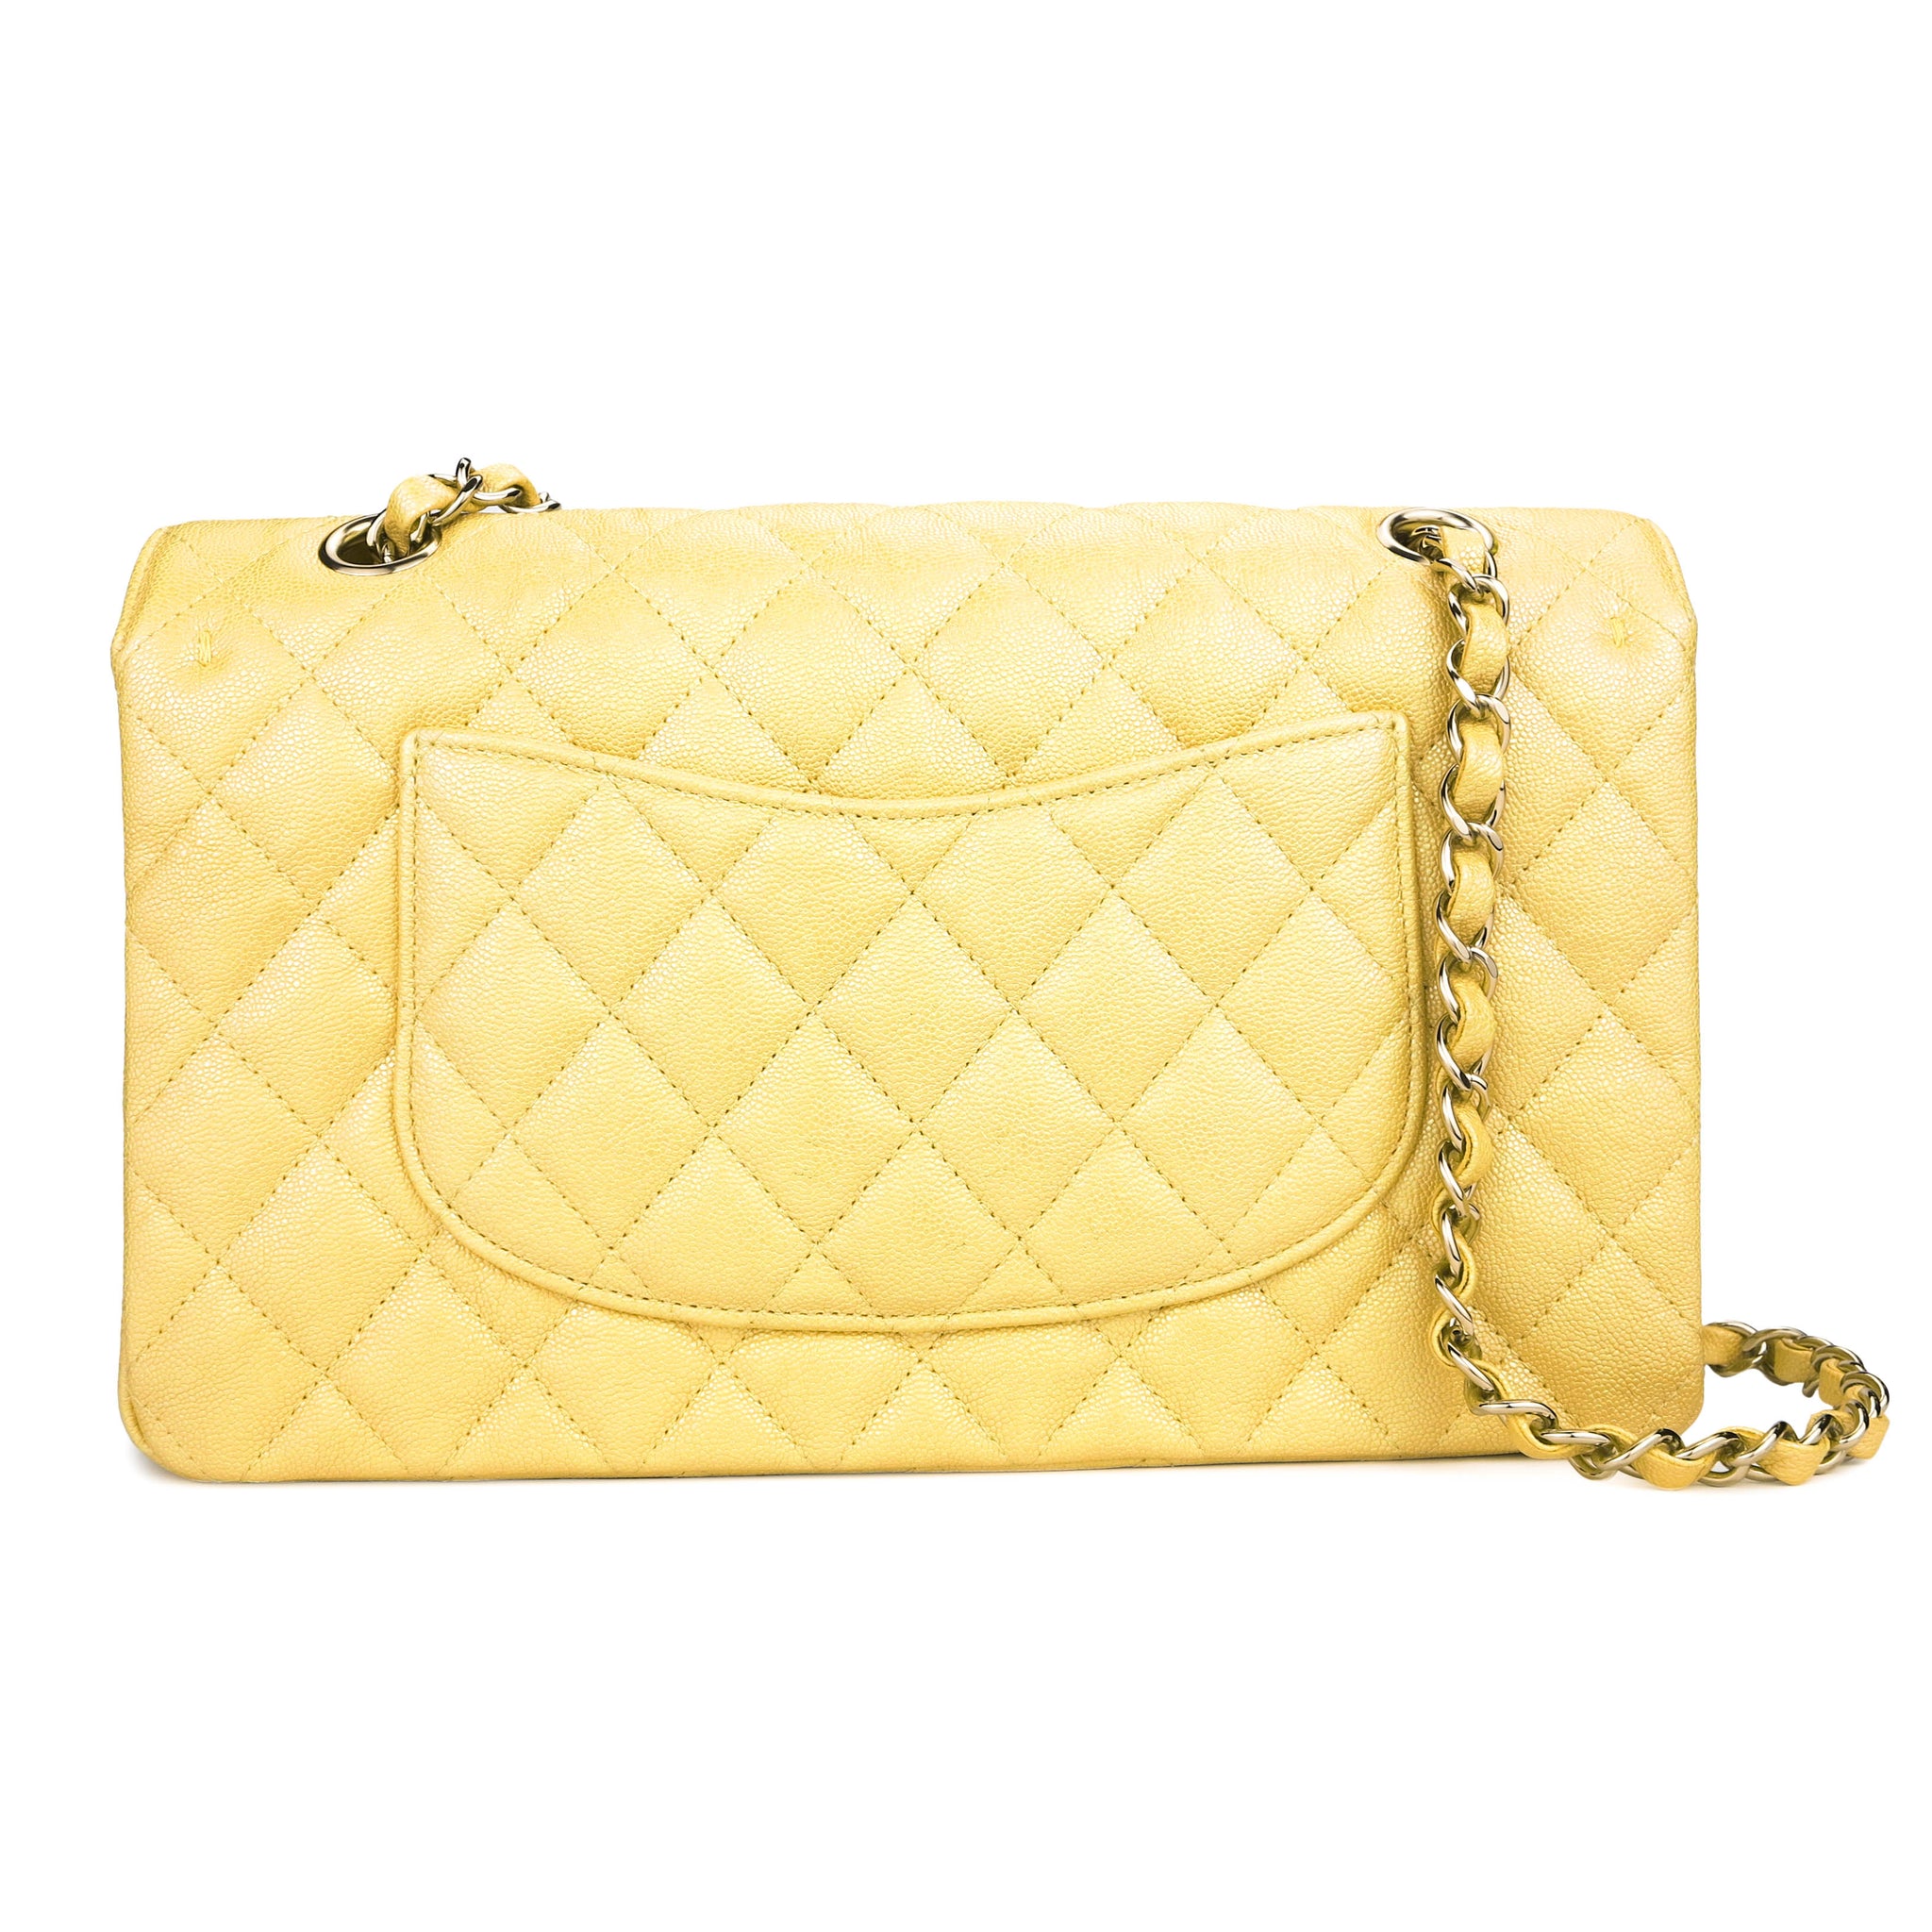 Chanel Maxi Jumbo Classic Yellow Leather Crossbody Shoulder Bag  eBay